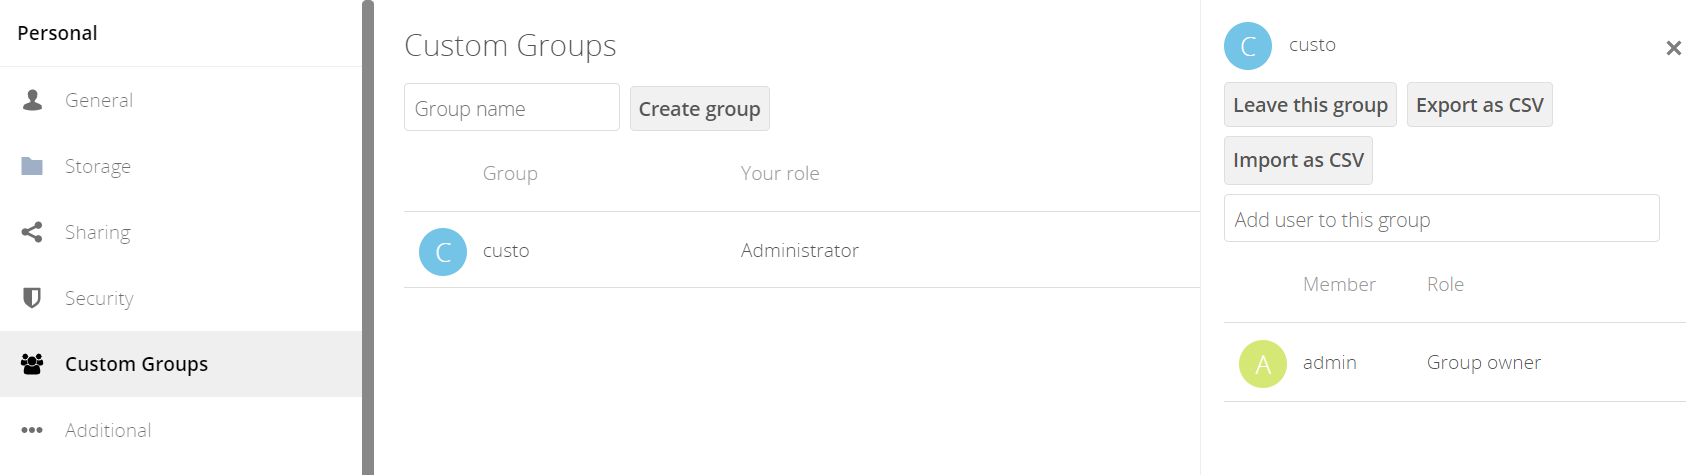 user settings custom groups